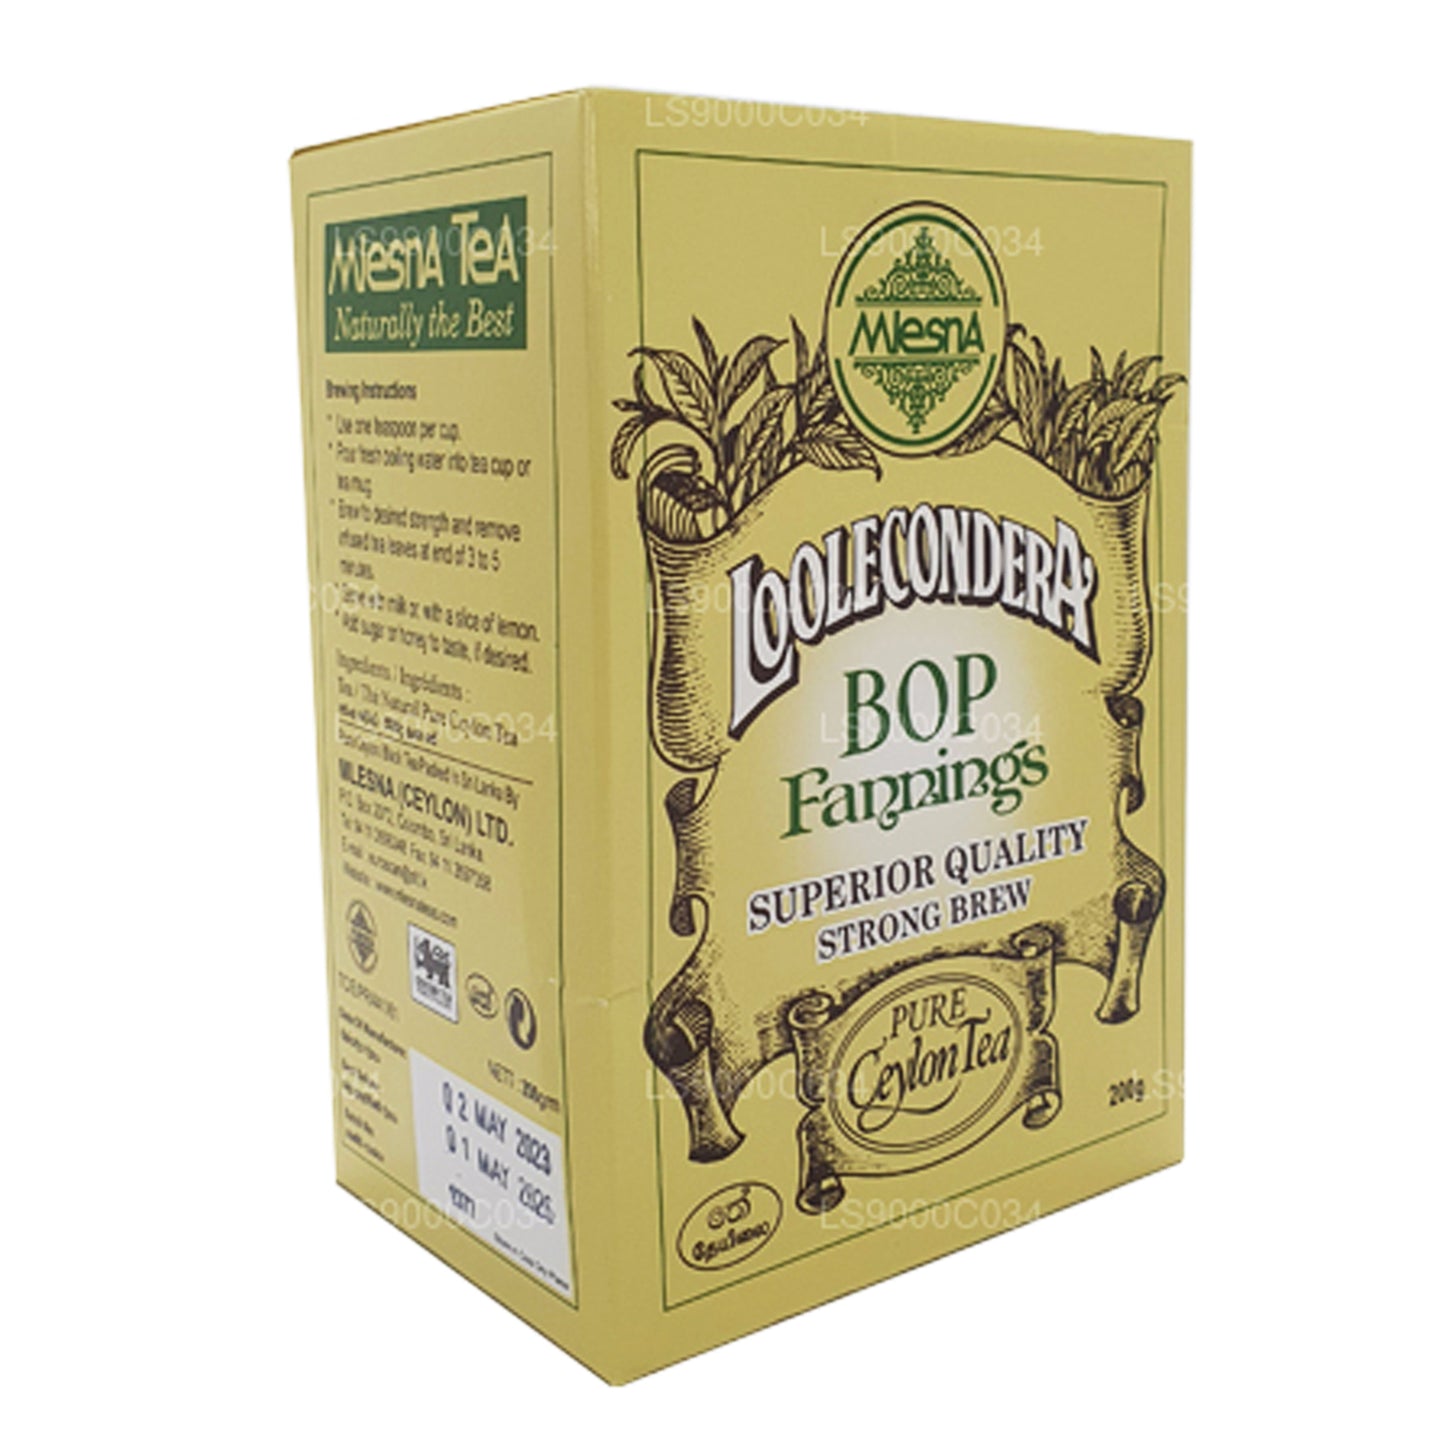 Mlesna Loolecondera BOP Fannings Strong Brew Loose Tea (200g)